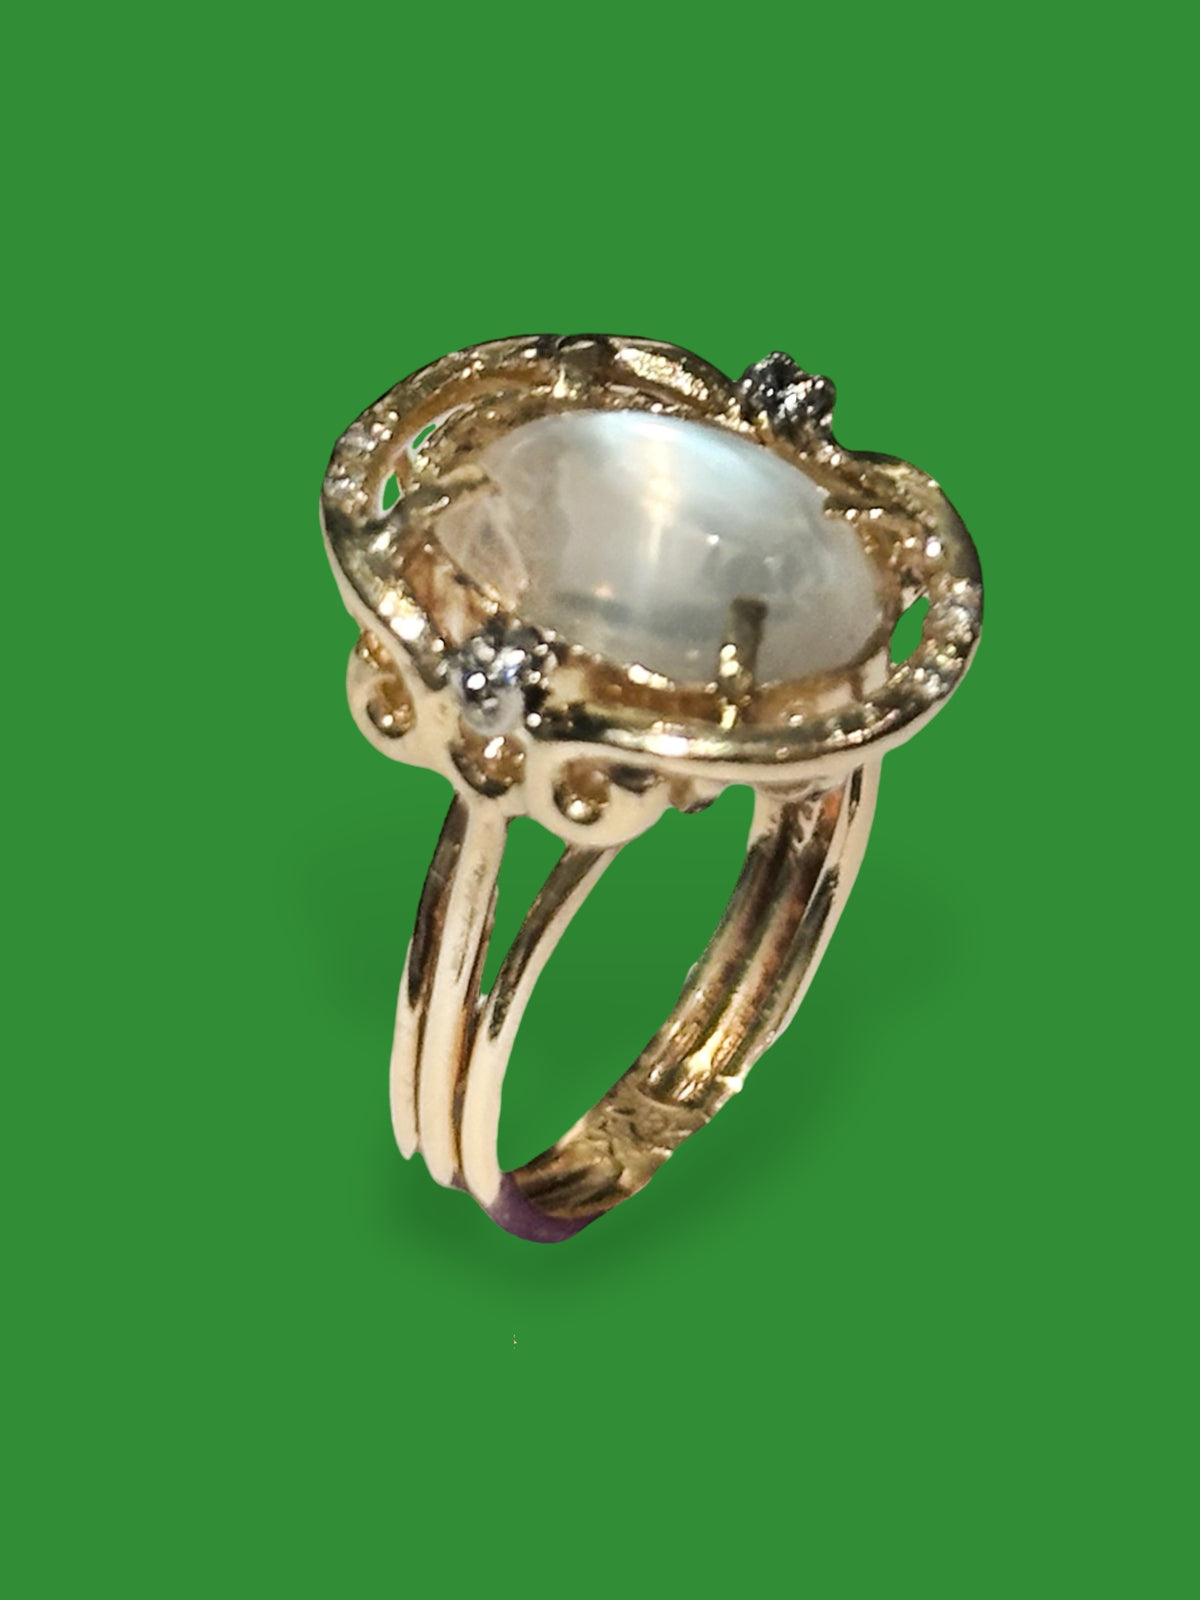 Witness the Captivating Modernization of an 18K Gold Vintage Ring!